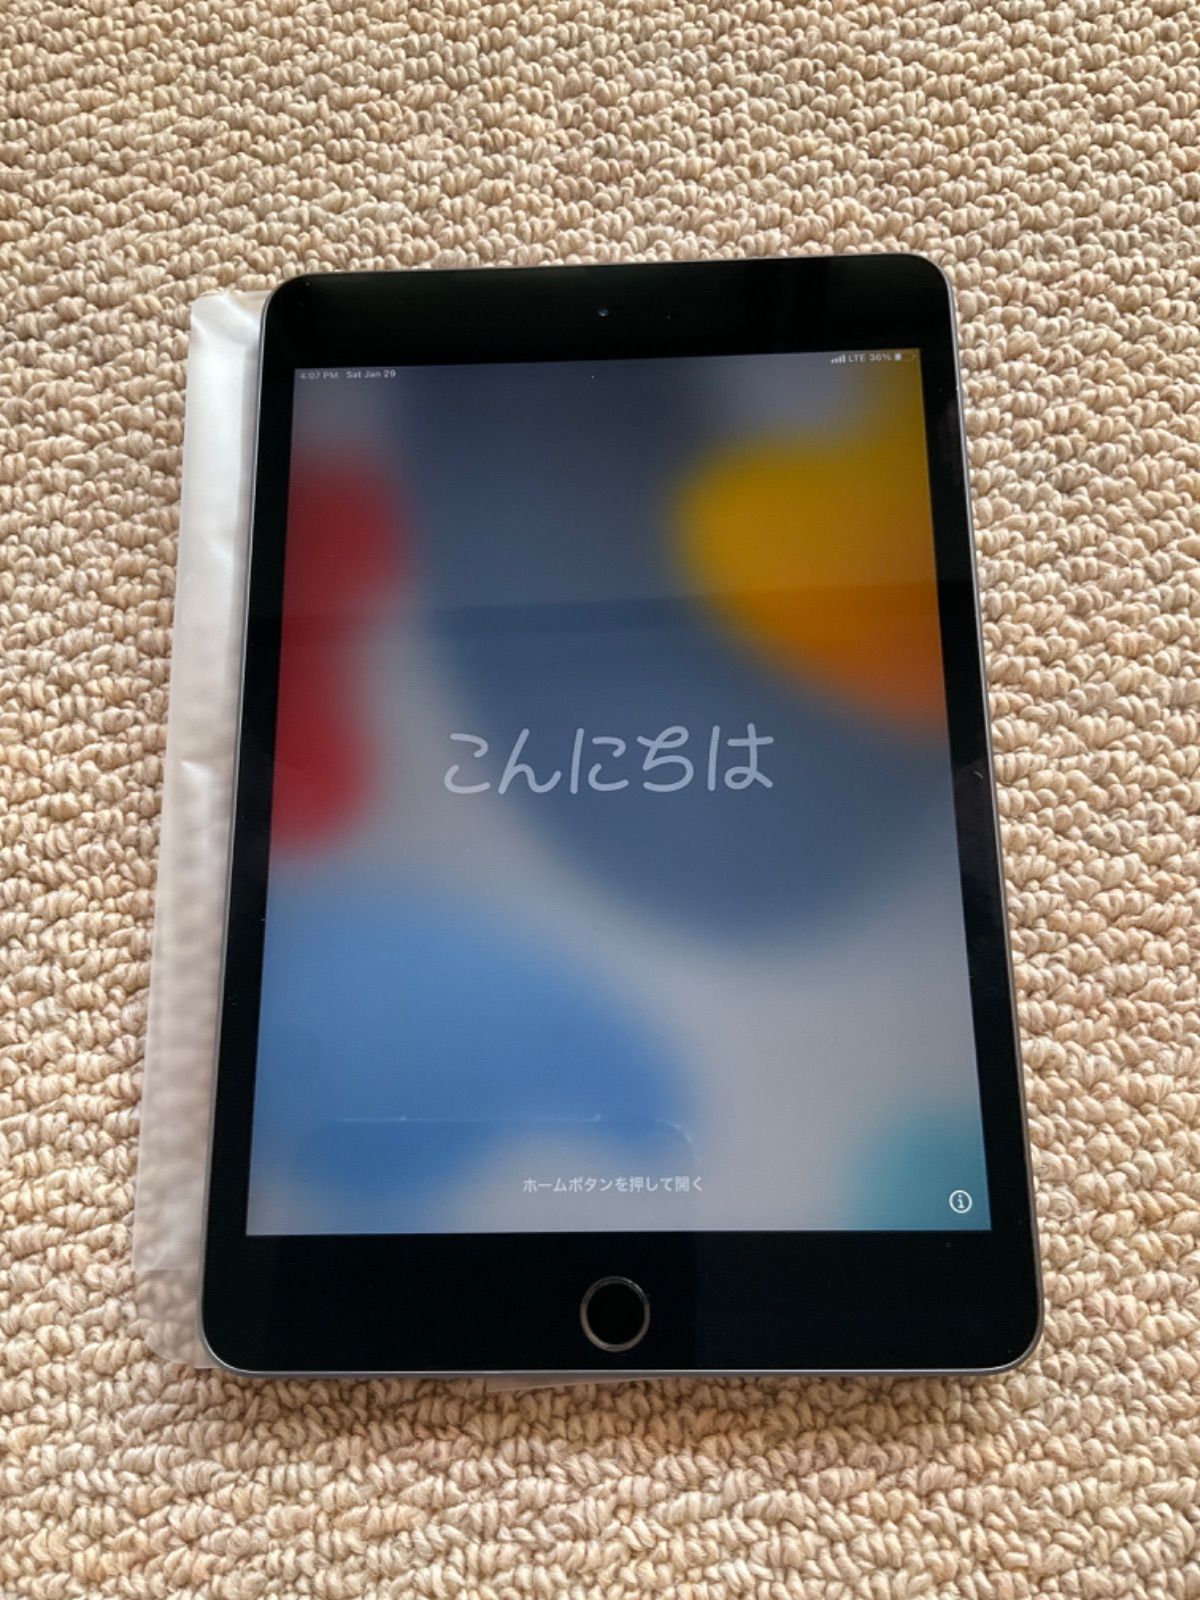 iPad mini 5 Wi-Fi+Cellular 256GB SIMフリー - もふもふ堂 - メルカリ